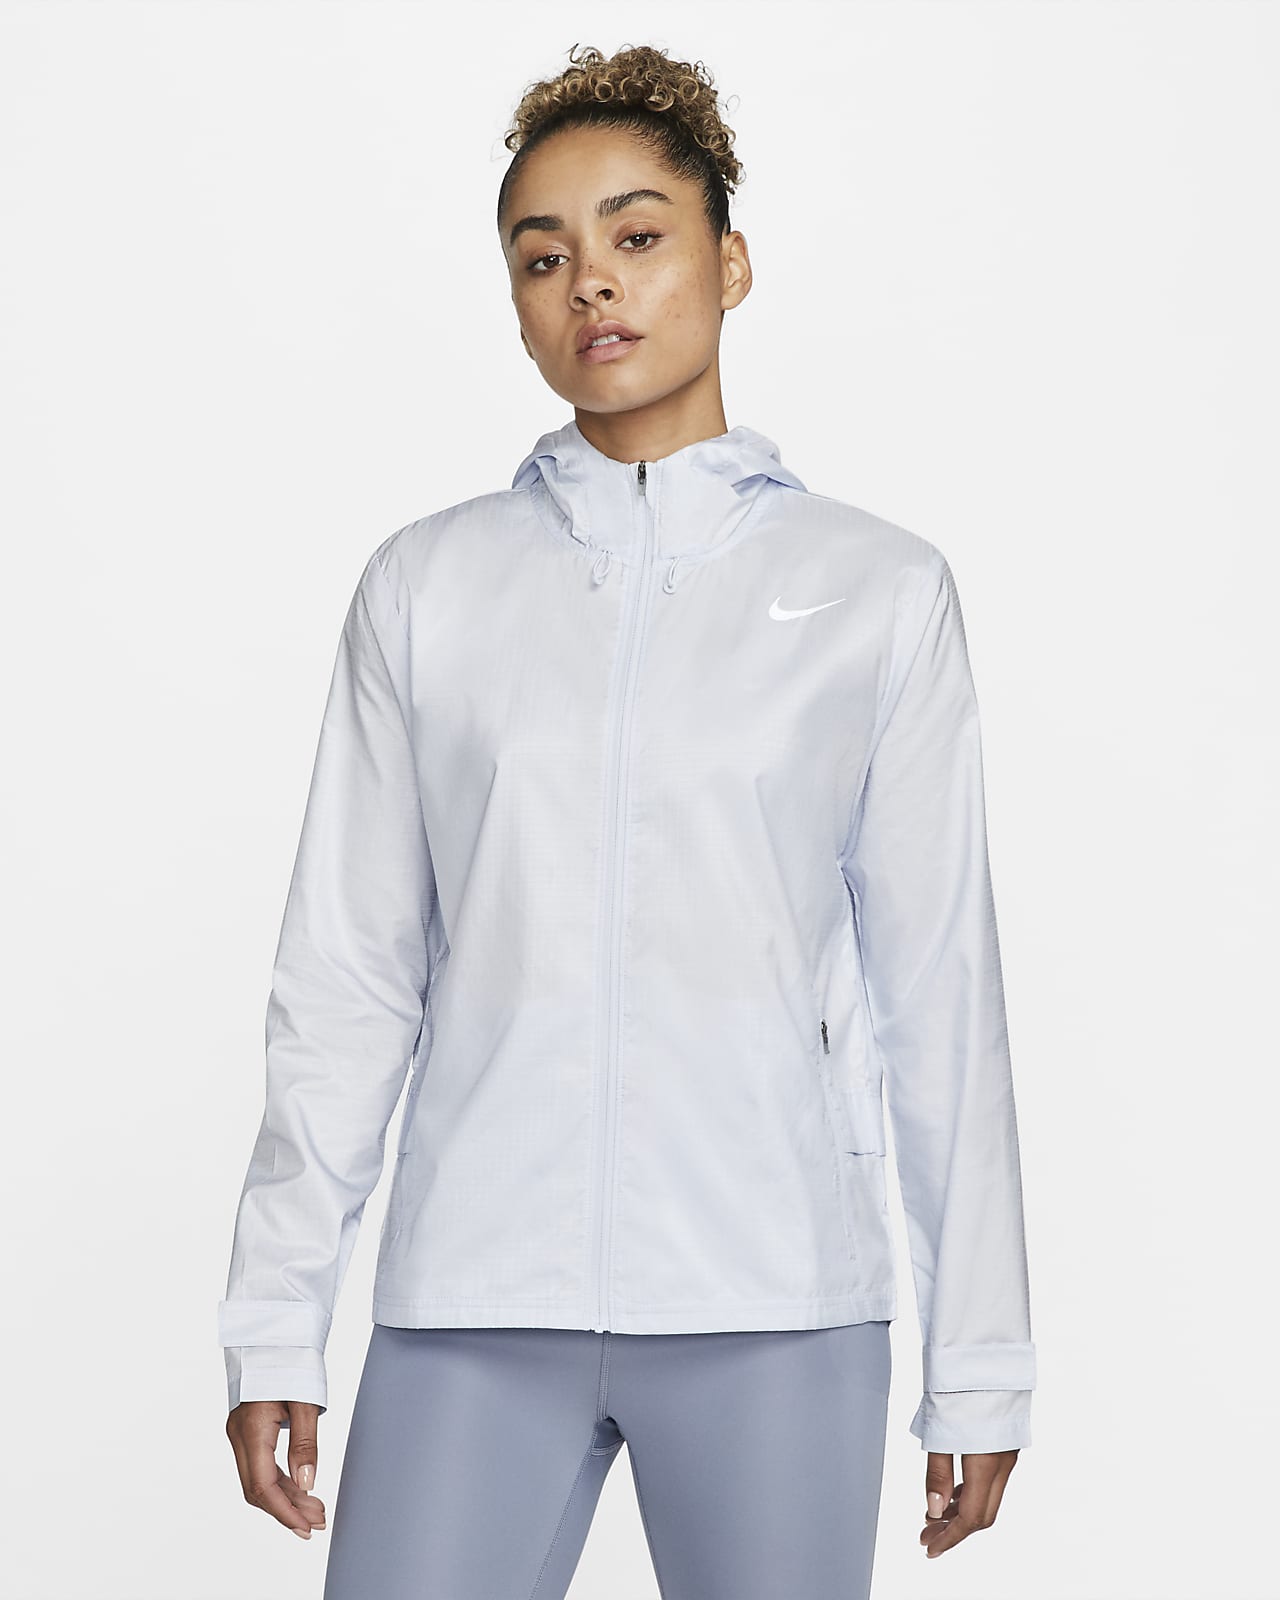 Pera Apellido profundamente Nike Essential Women's Running Jacket. Nike SE